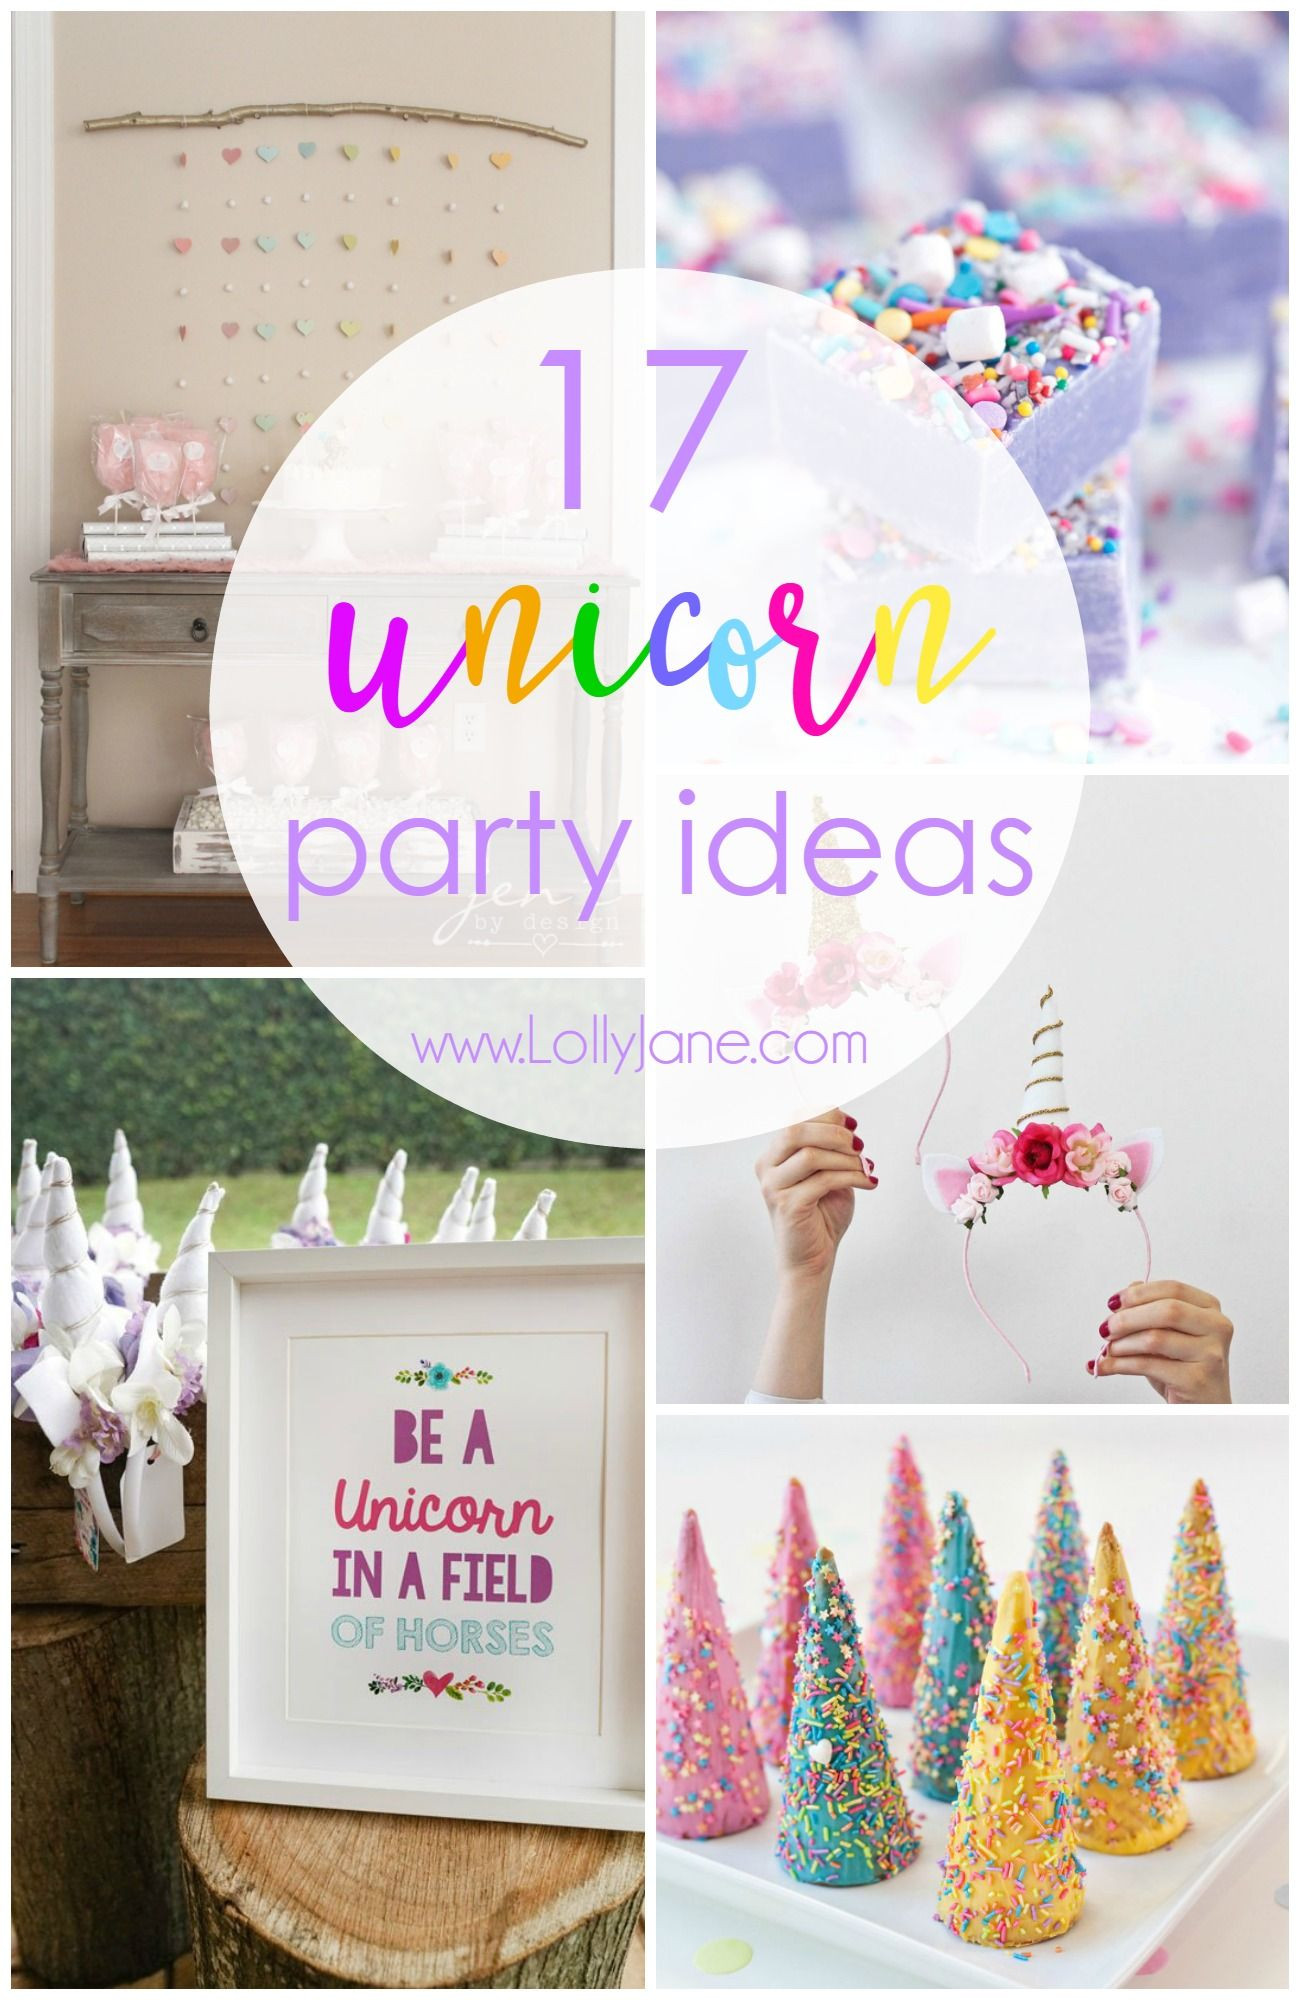 Rainbow Unicorn Birthday Party Ideas
 17 Unicorn Party Ideas To Throw The Ultimate Unicorn Party